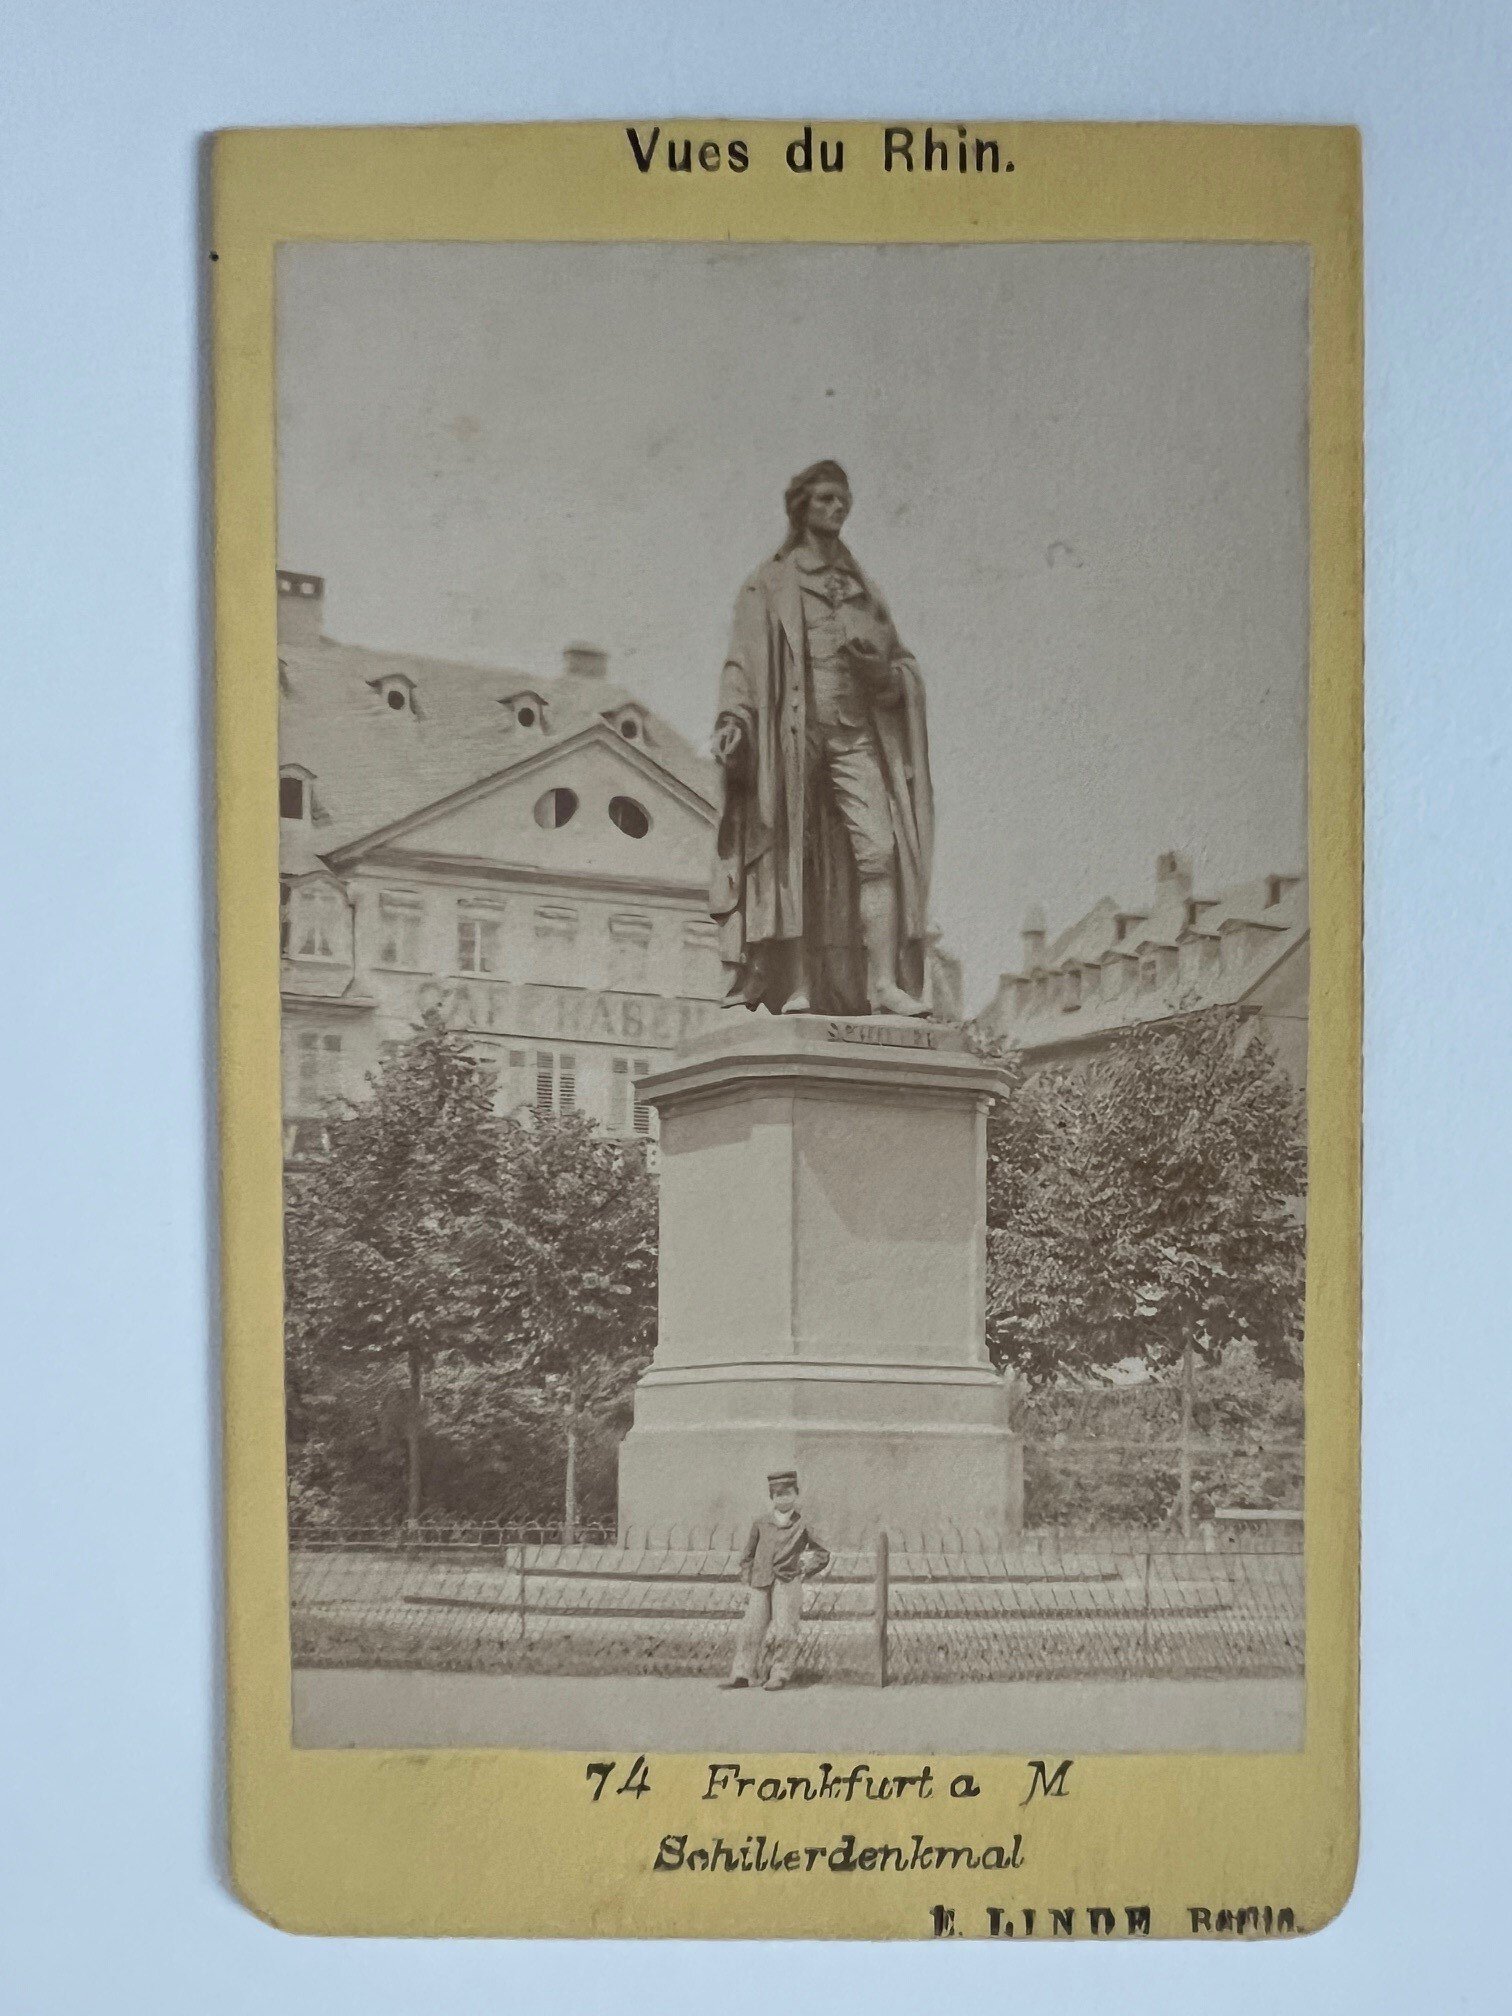 CdV, E. Linde, Frankfurt, Nr. 74, Schillerdenkmal, ca. 1874. (Taunus-Rhein-Main - Regionalgeschichtliche Sammlung Dr. Stefan Naas CC BY-NC-SA)